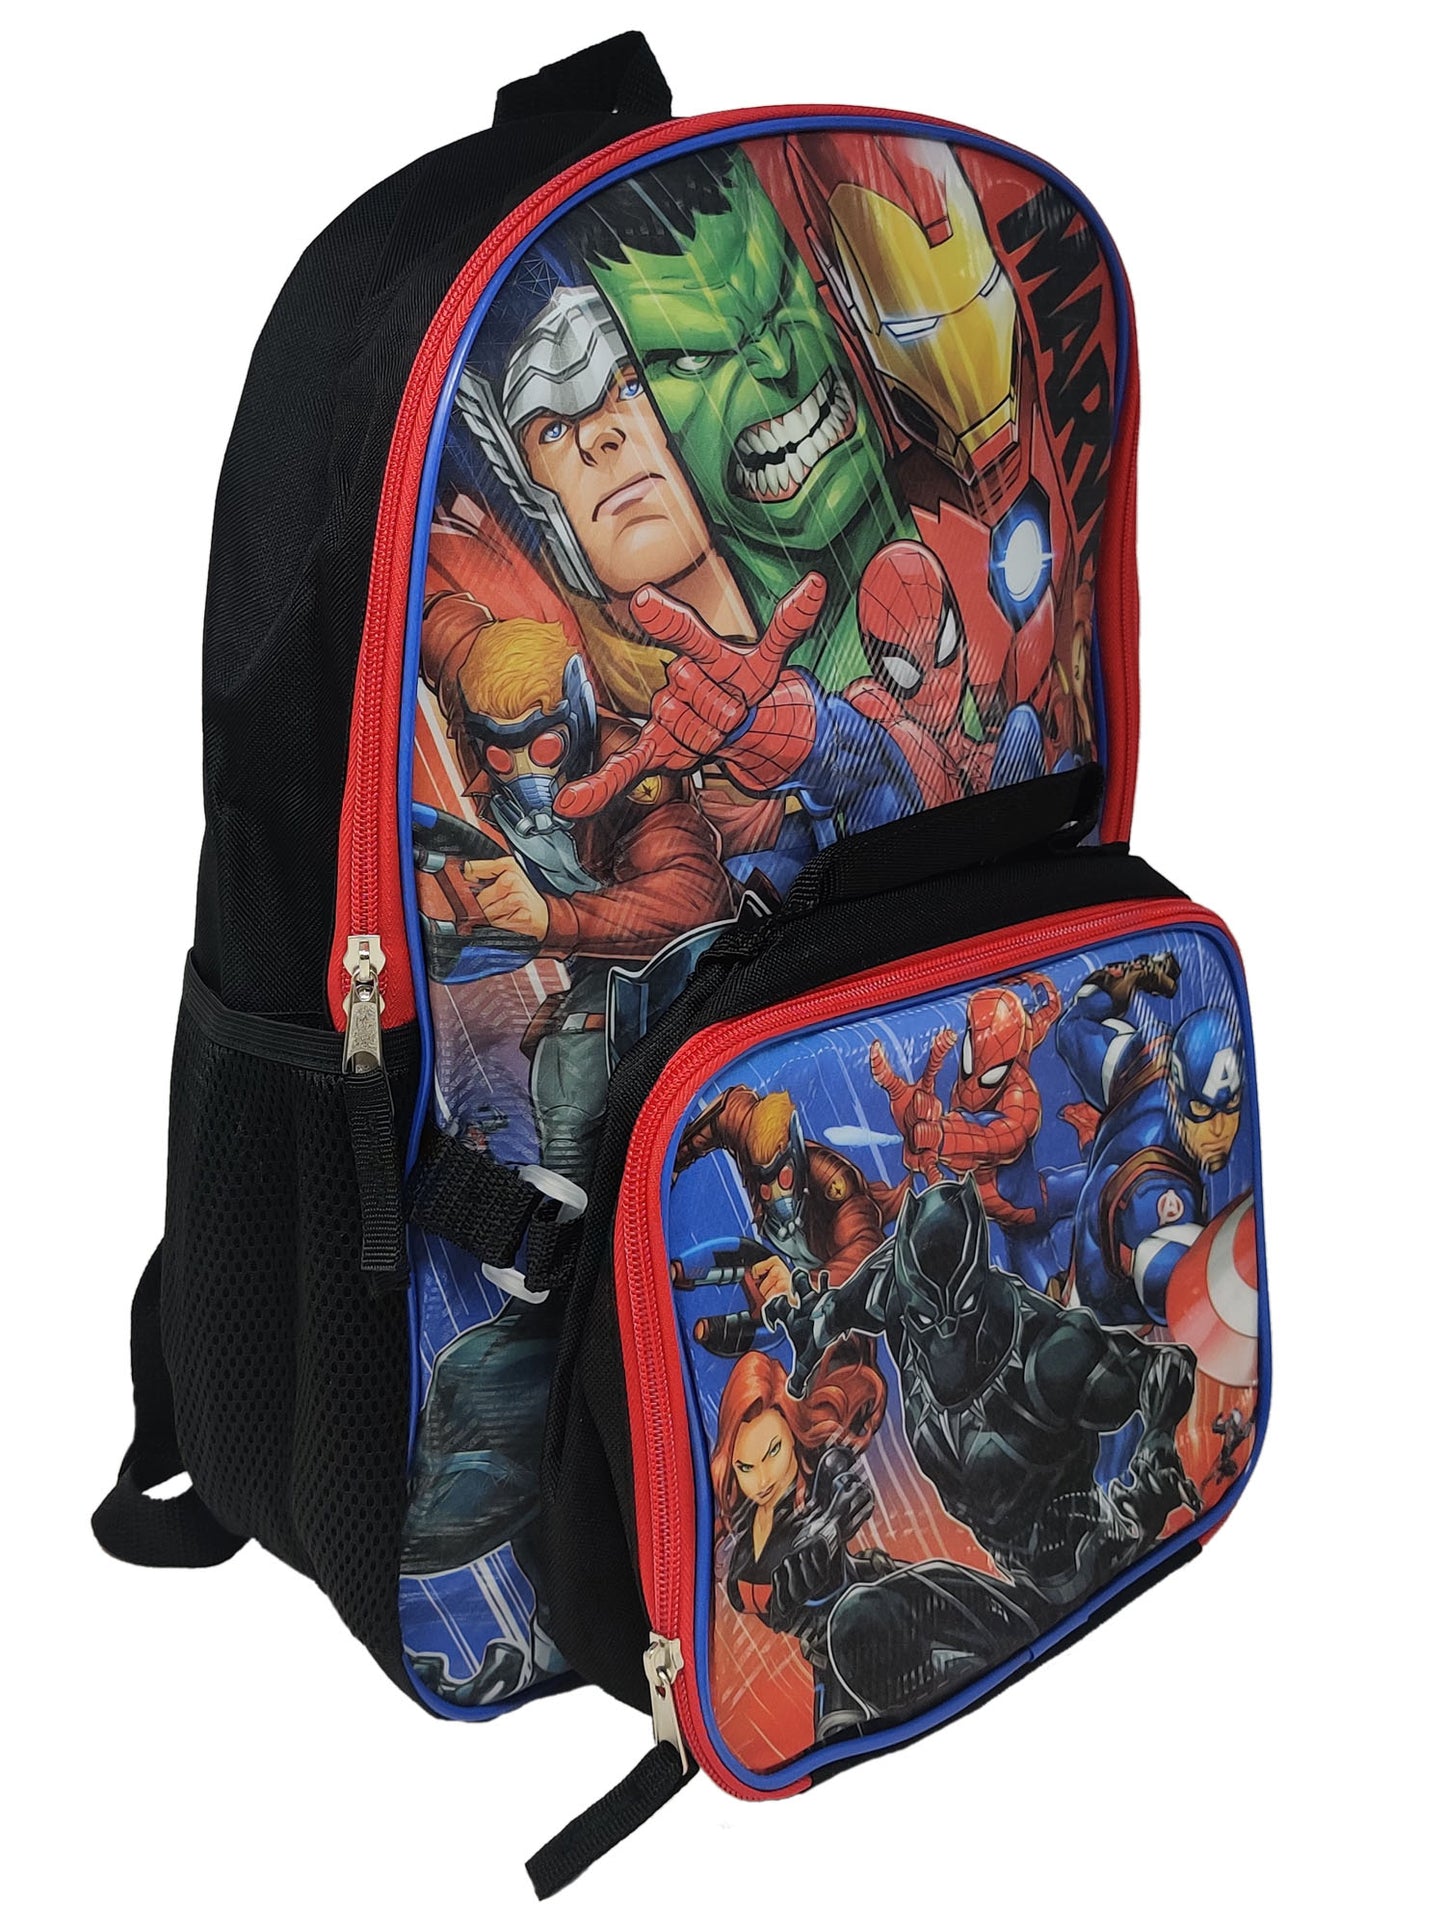 Avengers 16" Backpack & Insulated Lunch Bag w/ Marvel 4-Sheet Sticker Book Set